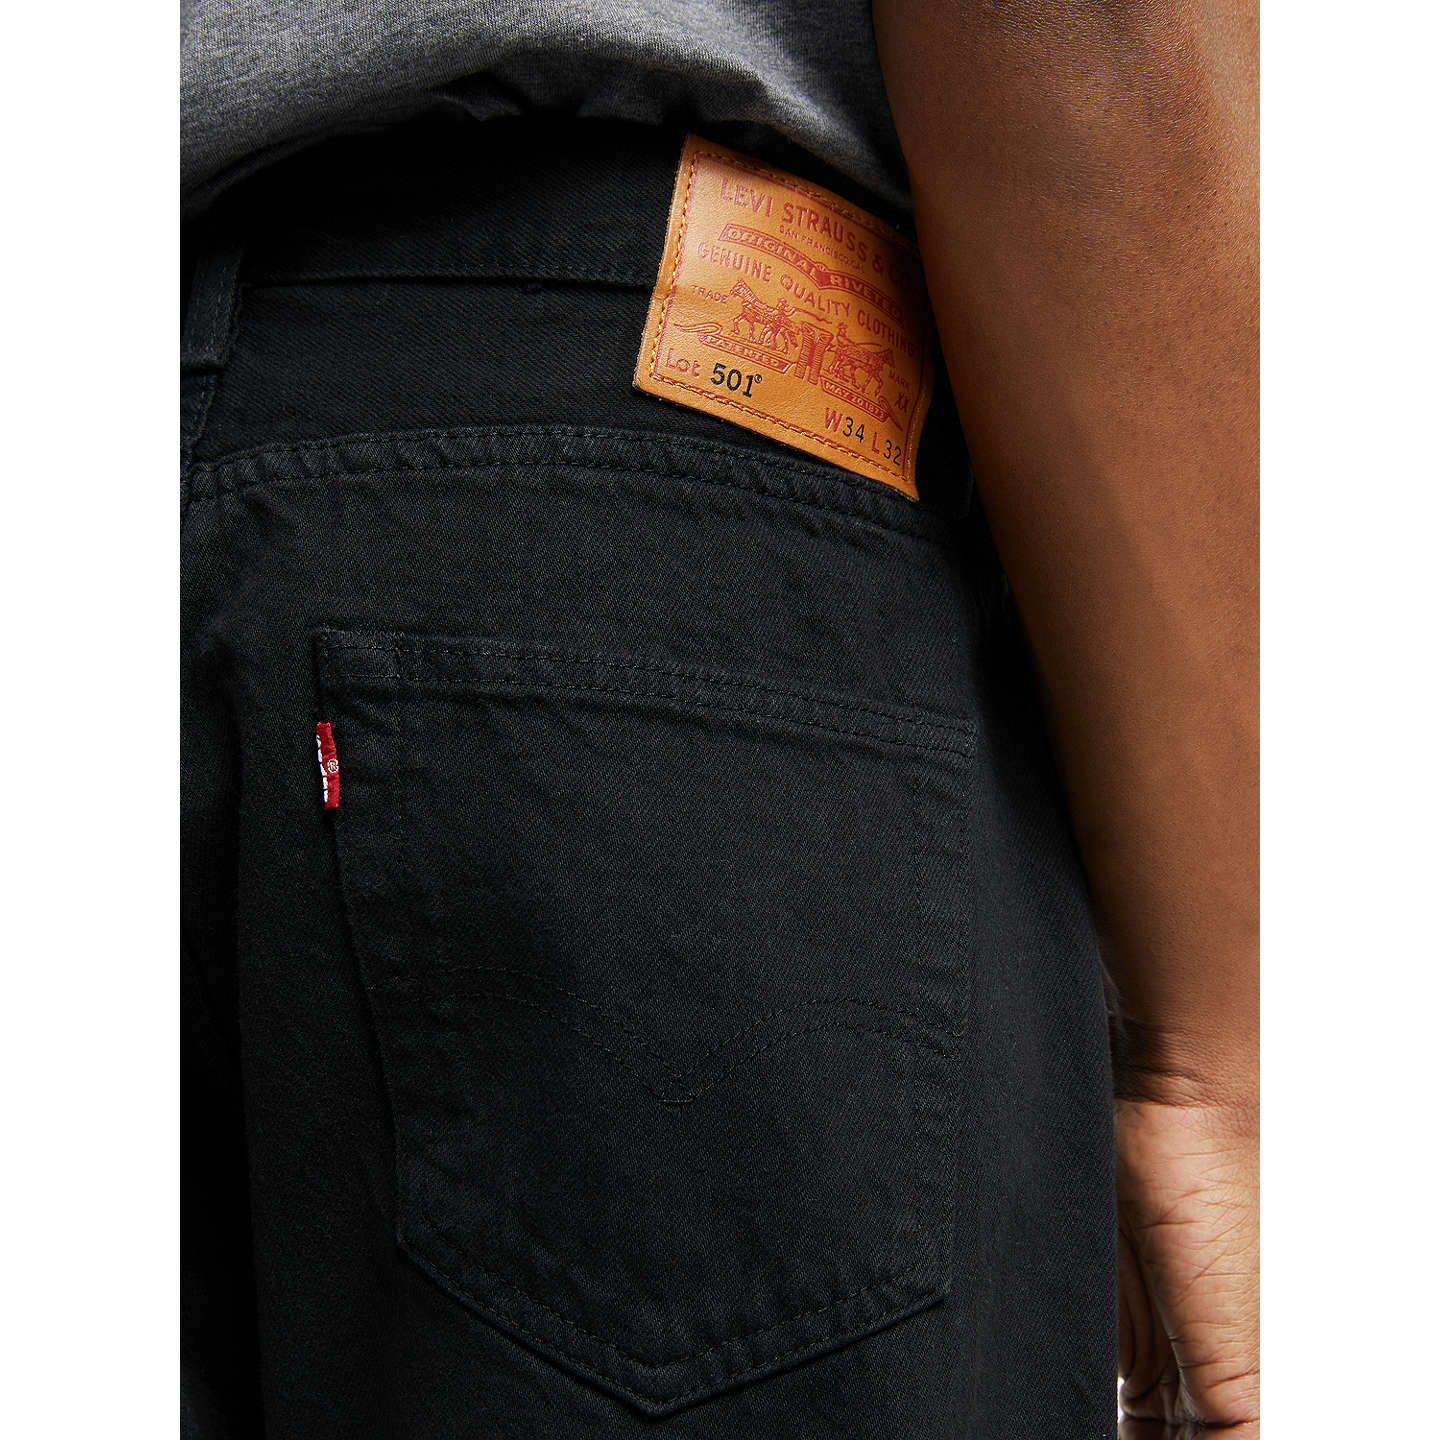 Levi's 501 Original Straight Jeans, Black at John Lewis